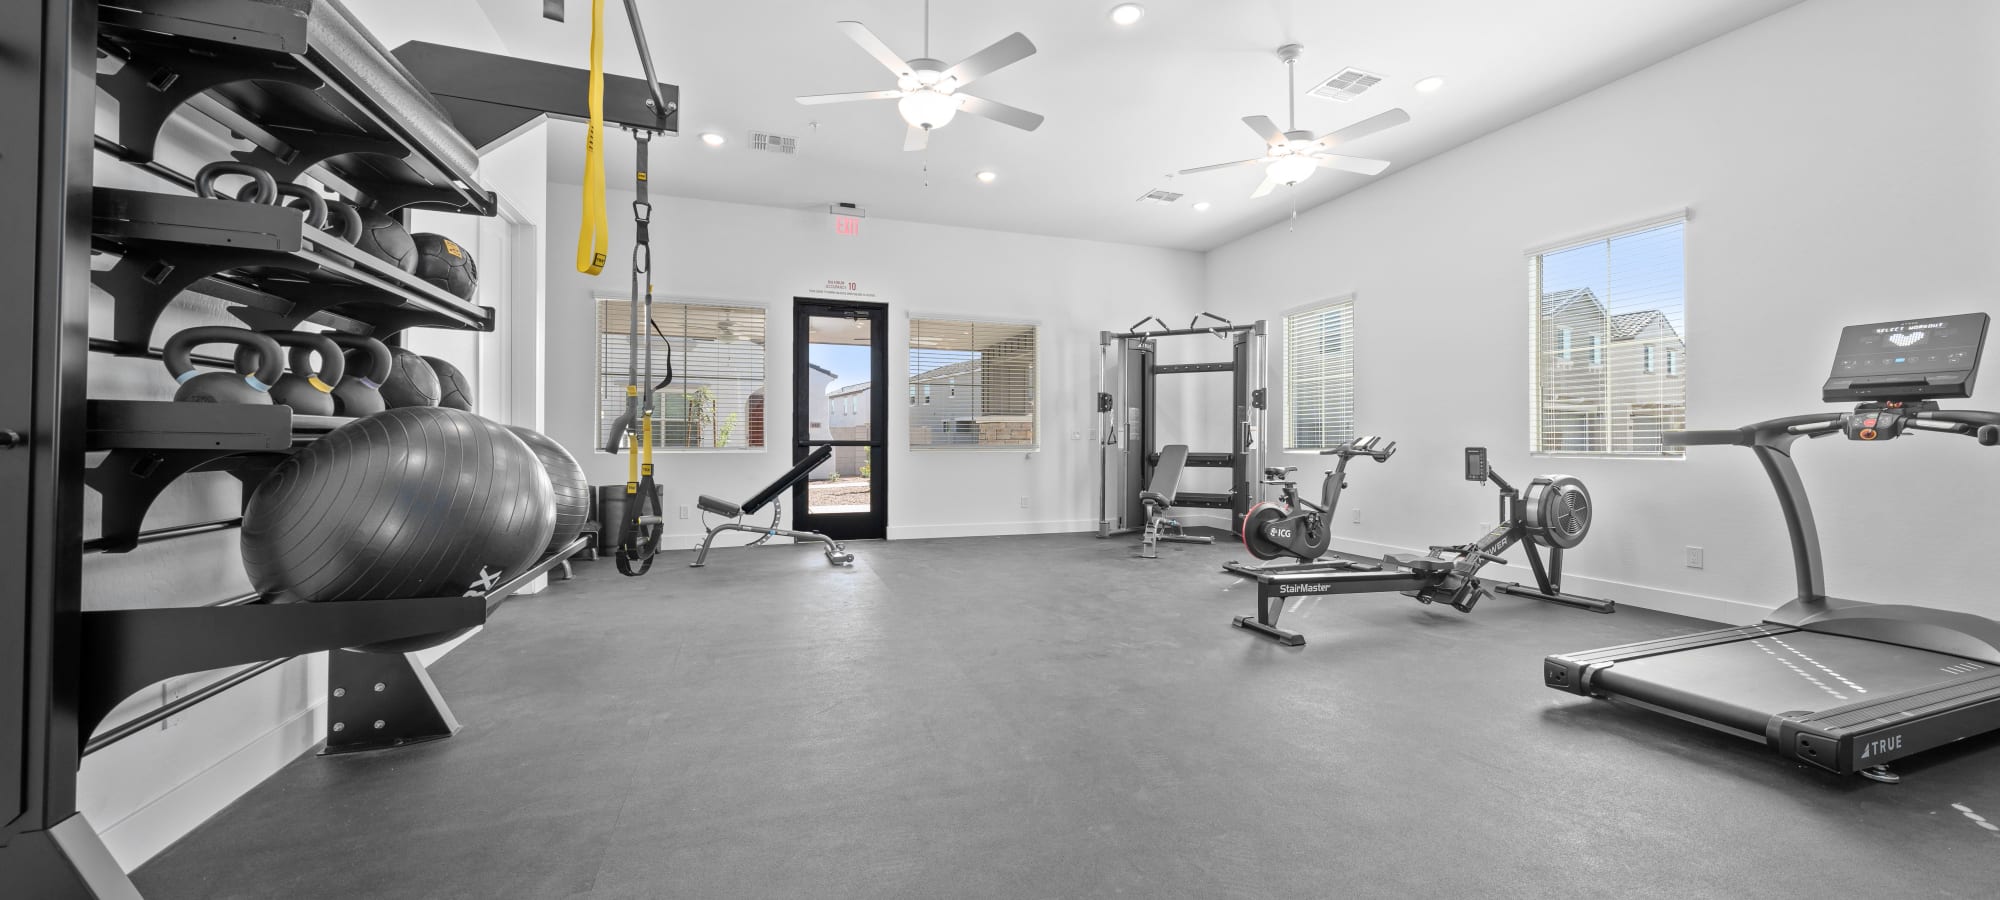 Fitness center at Ironwood Homes at River Run in Avondale, Arizona